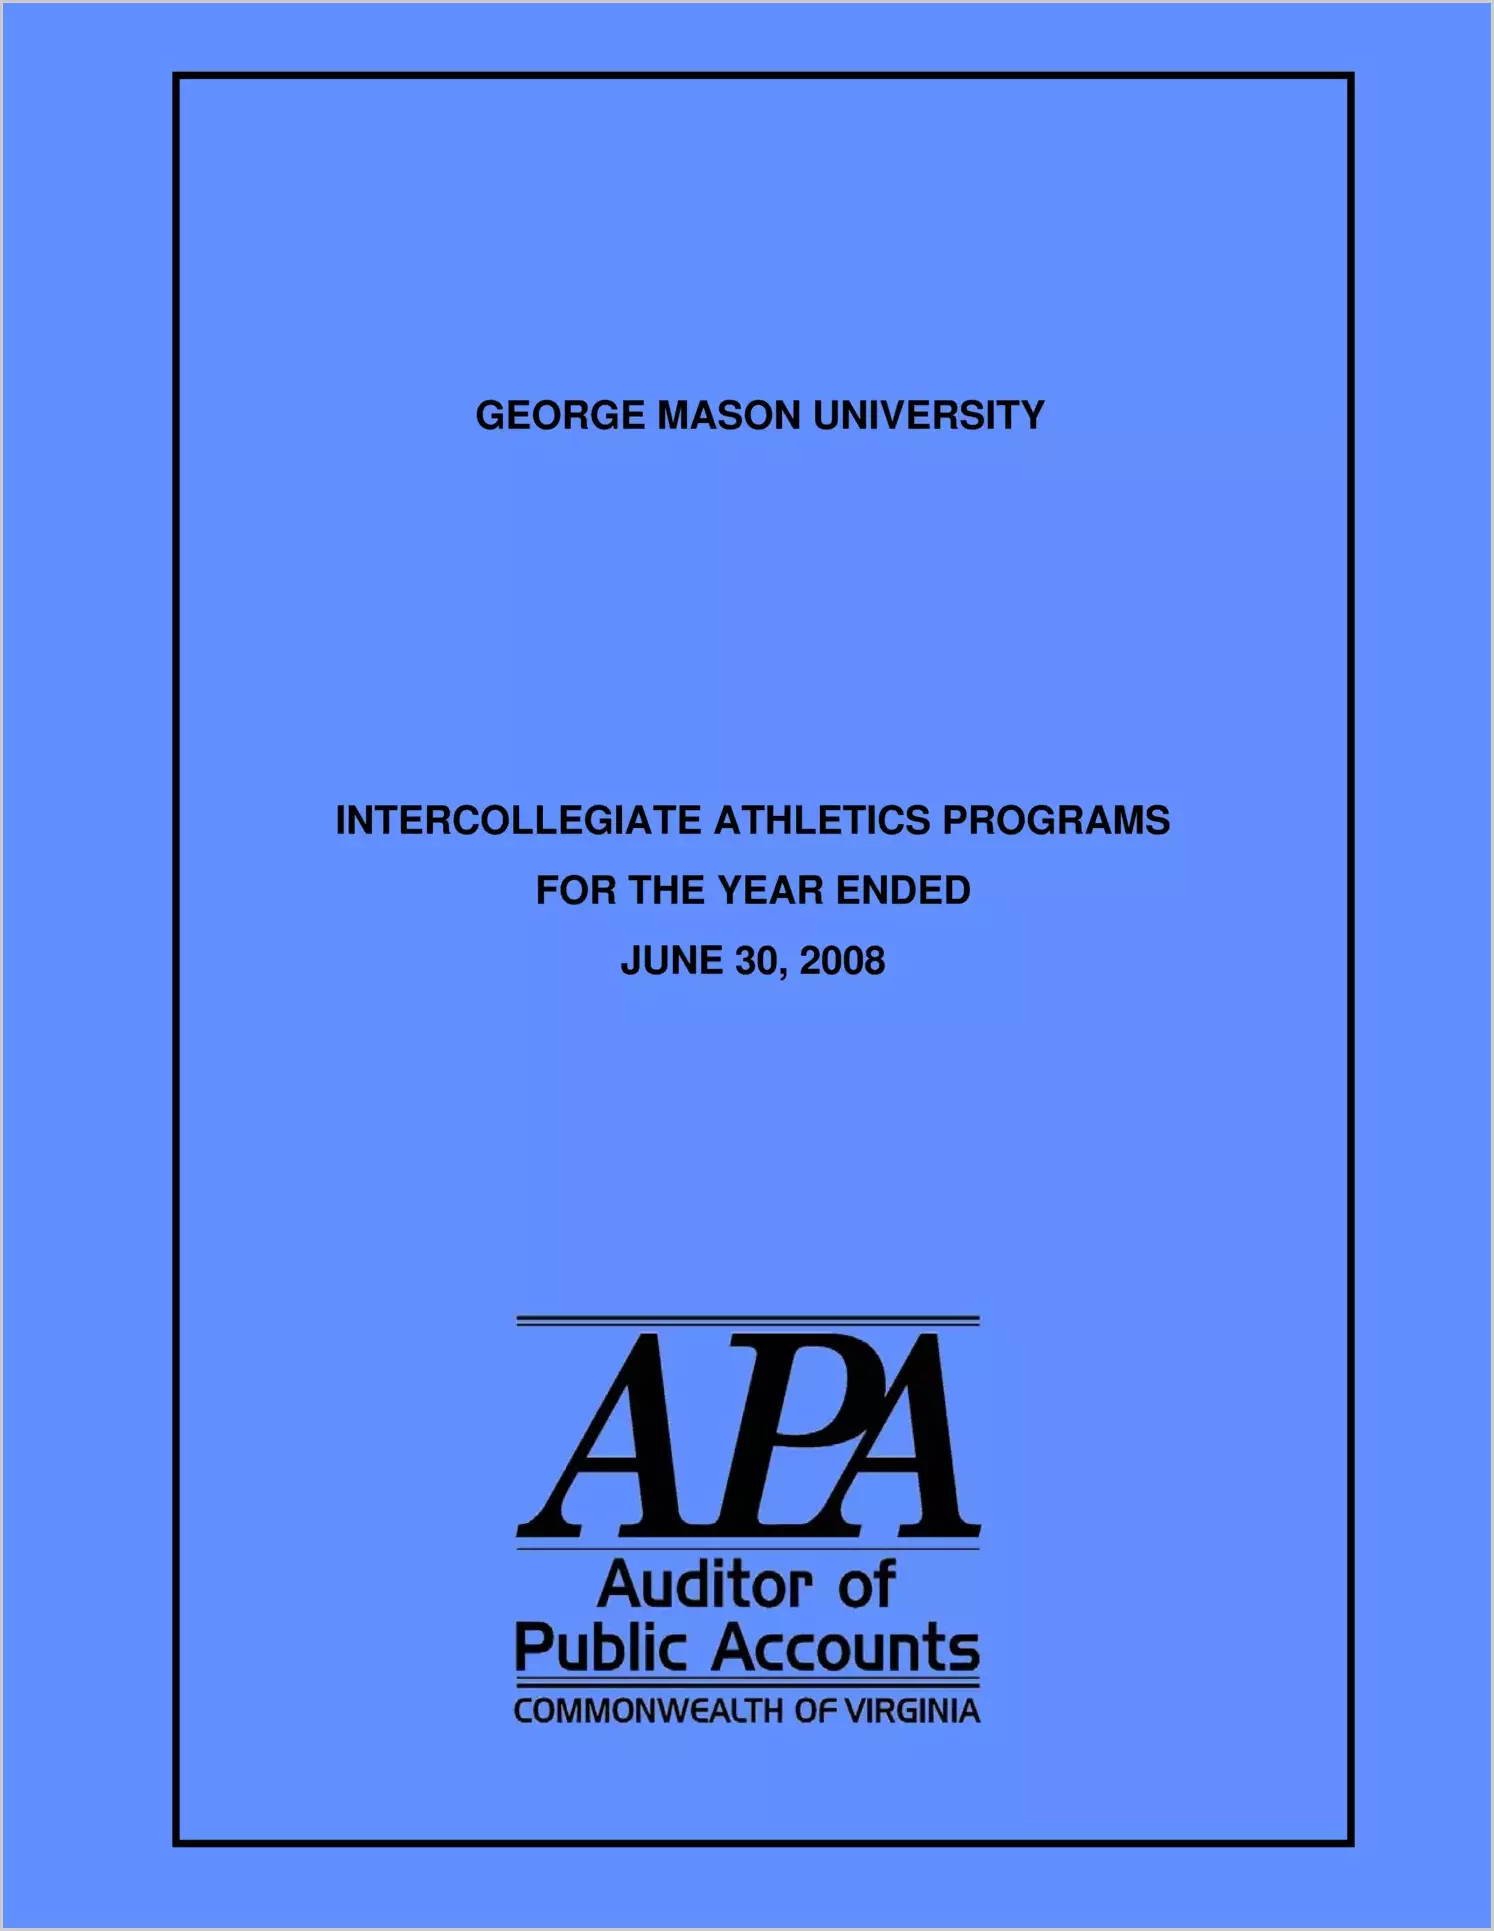 George Mason University Intercollegiate Athletics Programs for the year ended June 30, 2008